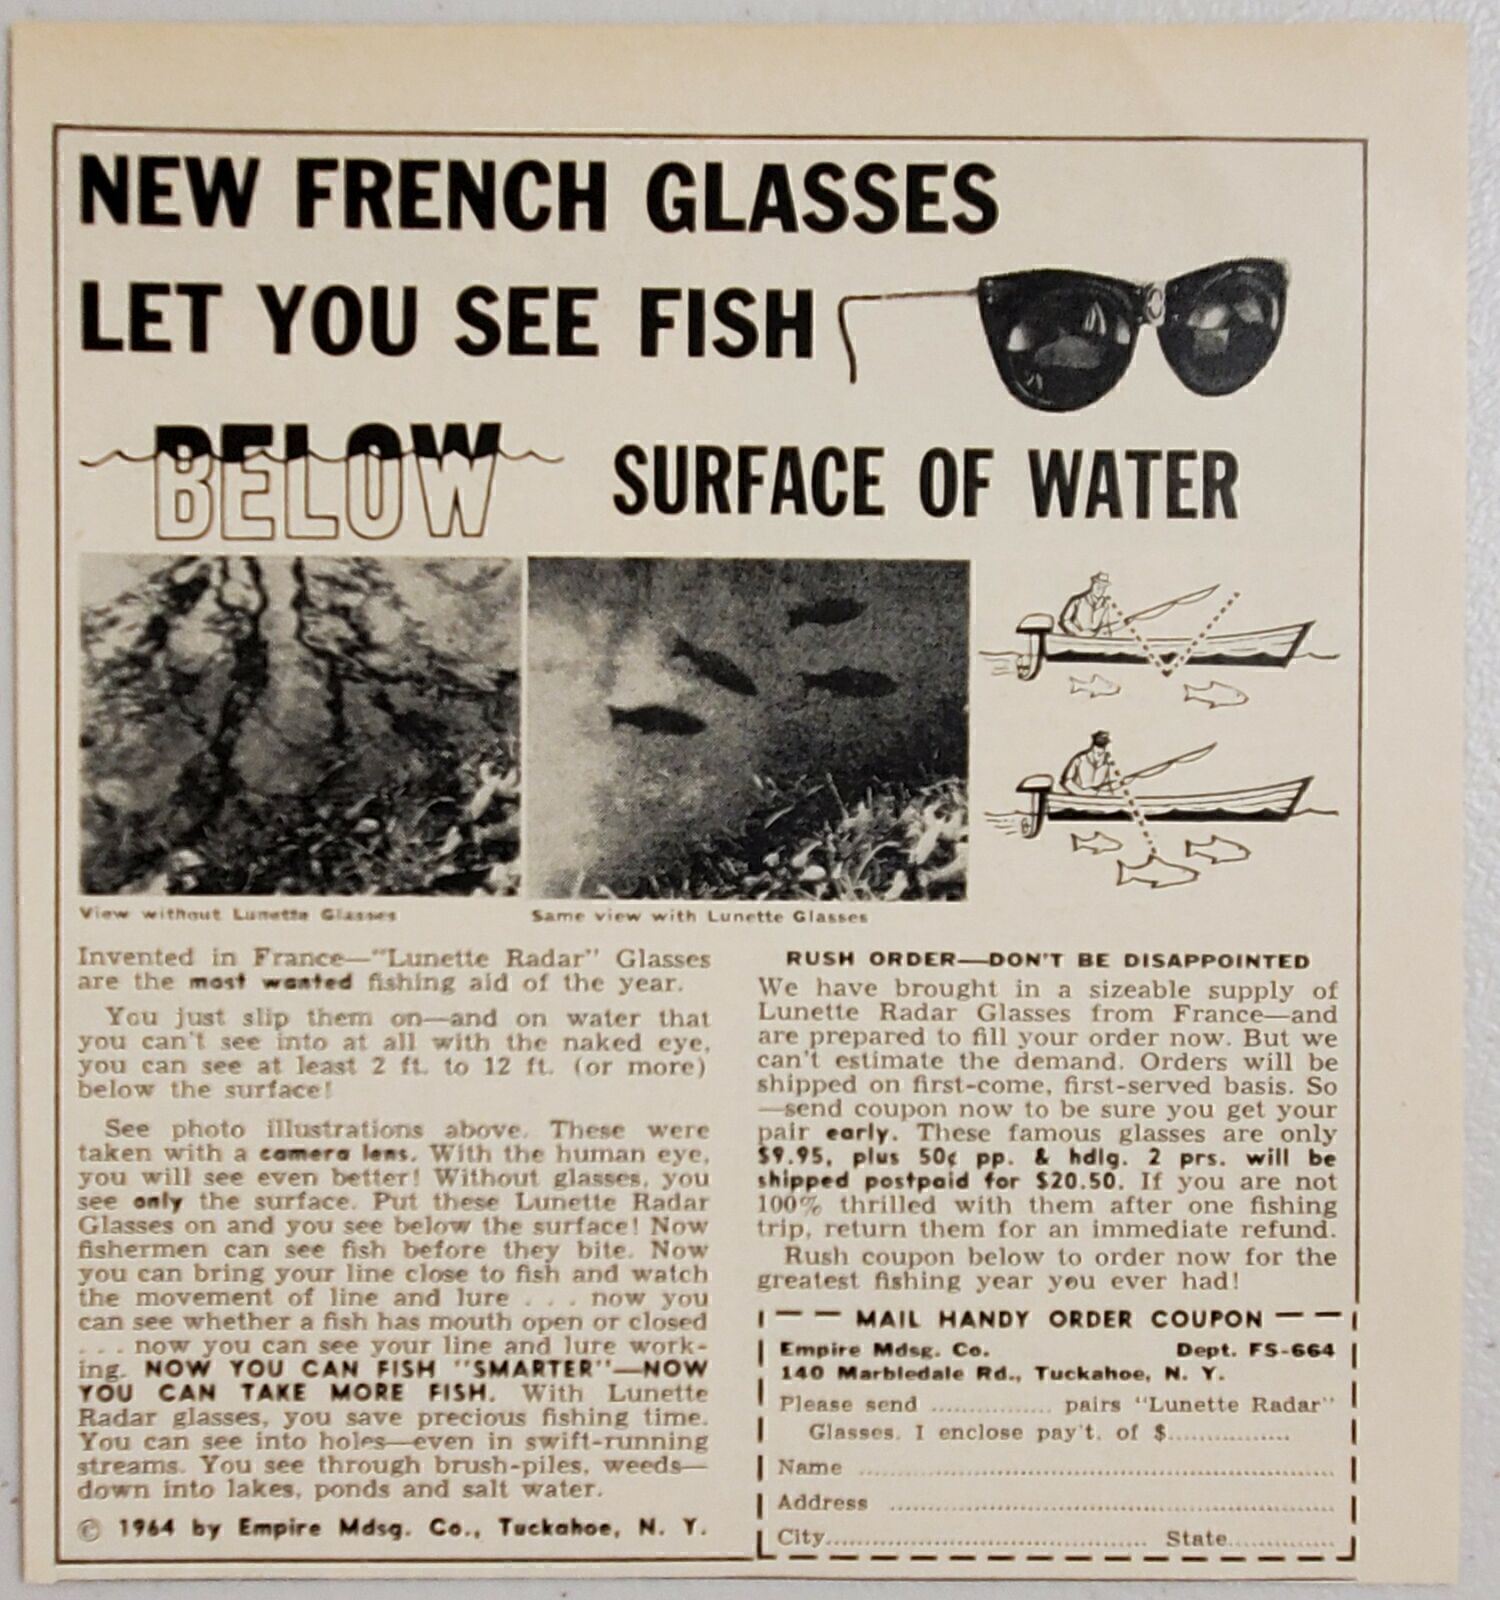 1964 Print Ad French Lunette Radar Glasses for Fishing Tuckahoe,New York